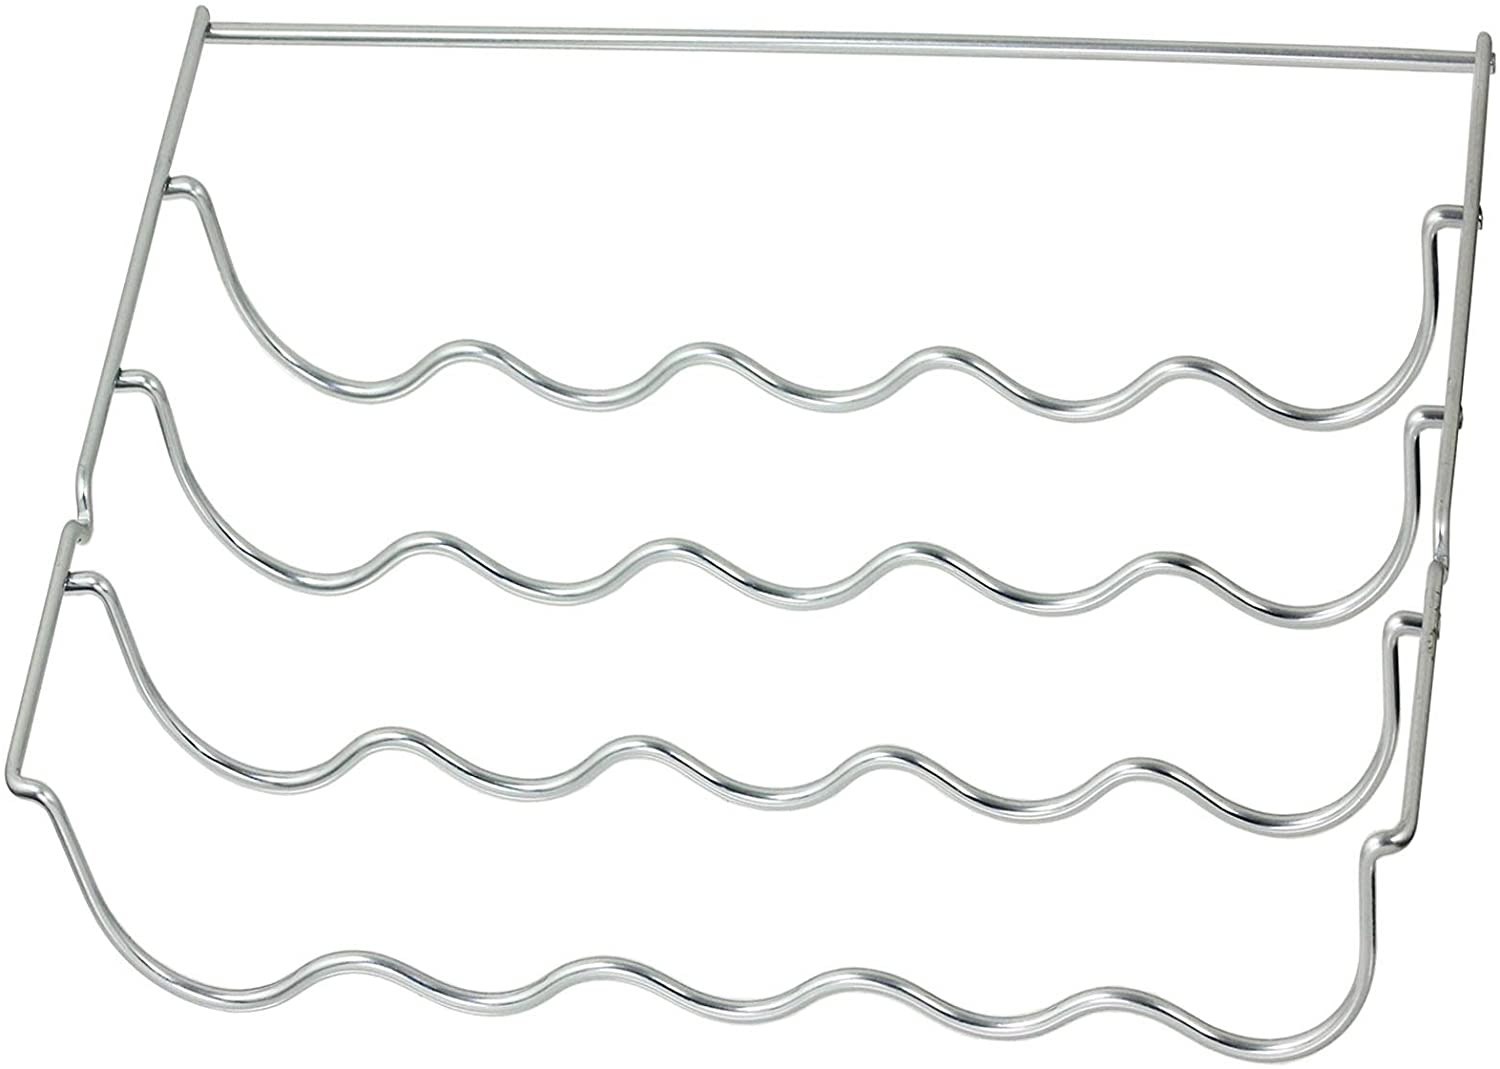 Wine Bottle Rack Shelf Insert compatible with Electrolux Fridge (460 x 290 x 70mm)